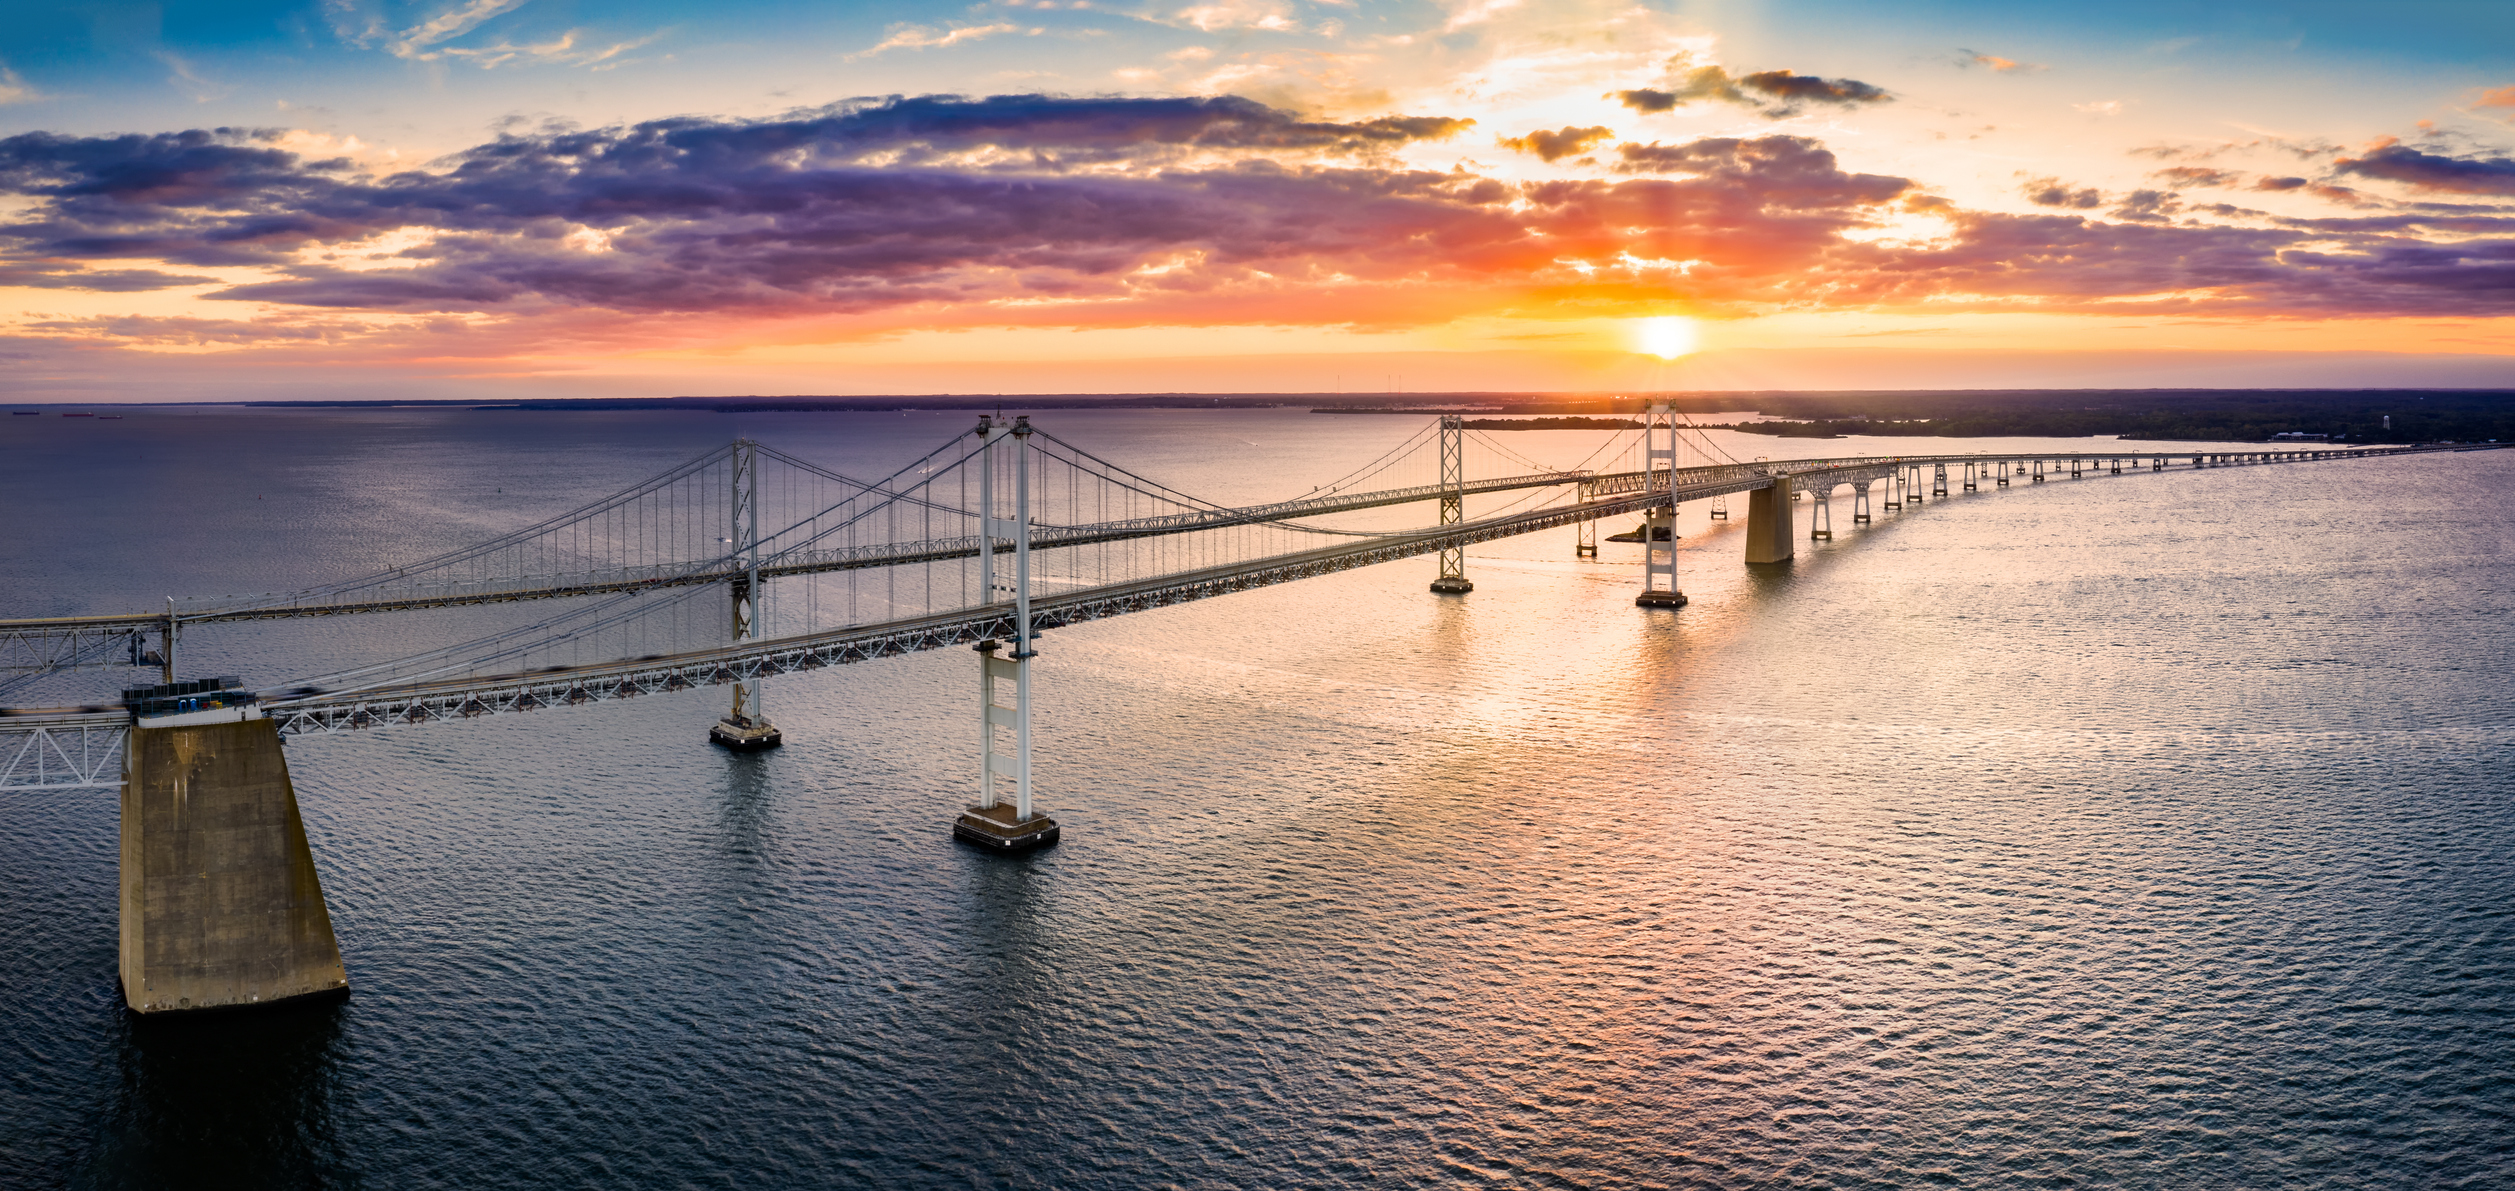 Aerial view of Chesapeake Bay Bridge at sunset.